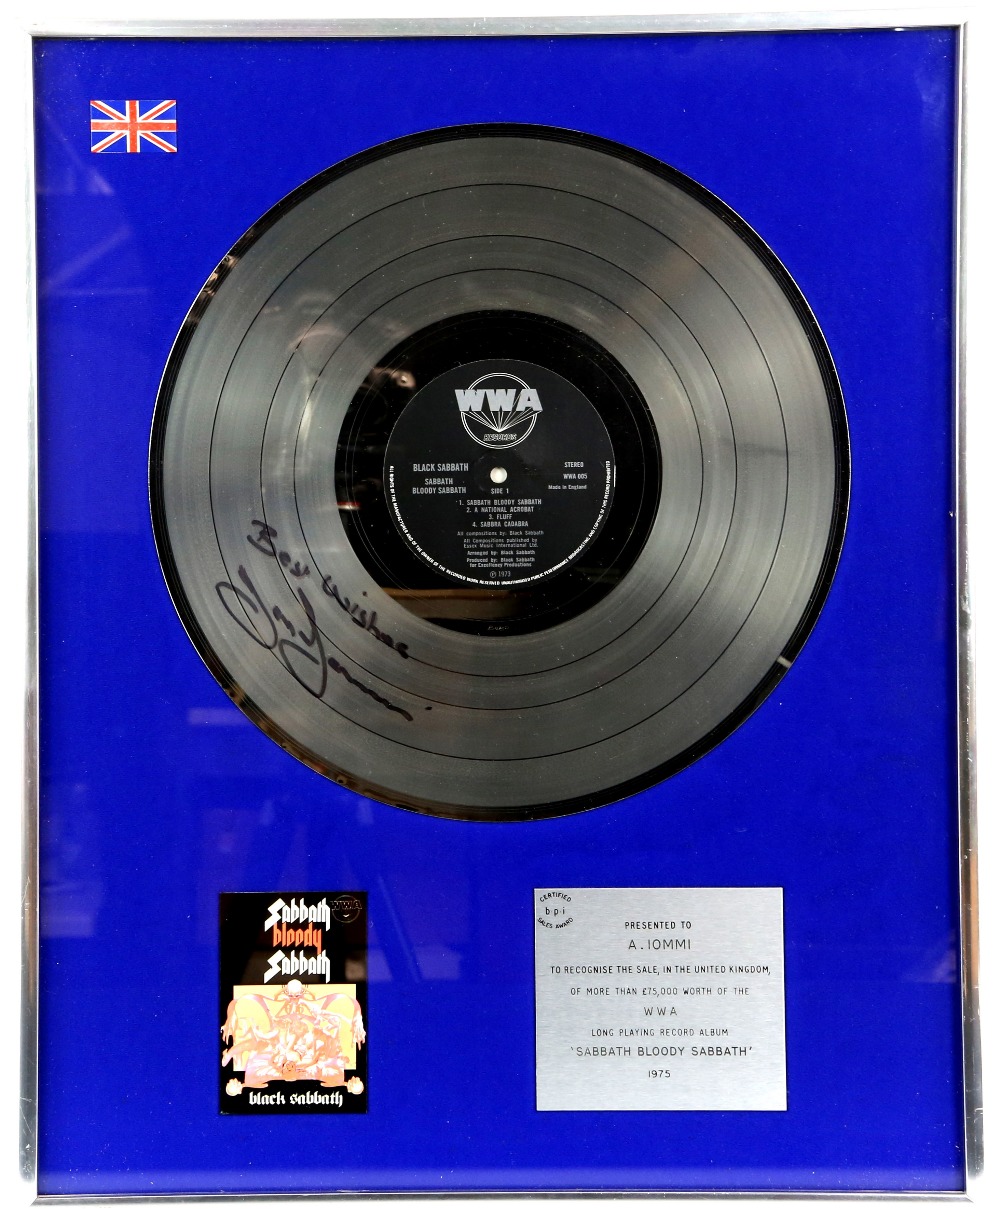 Black Sabbath - 'Sabbath Bloody Sabbath' - Certified b.p.i. Sales Award disc presented to A. Iommi